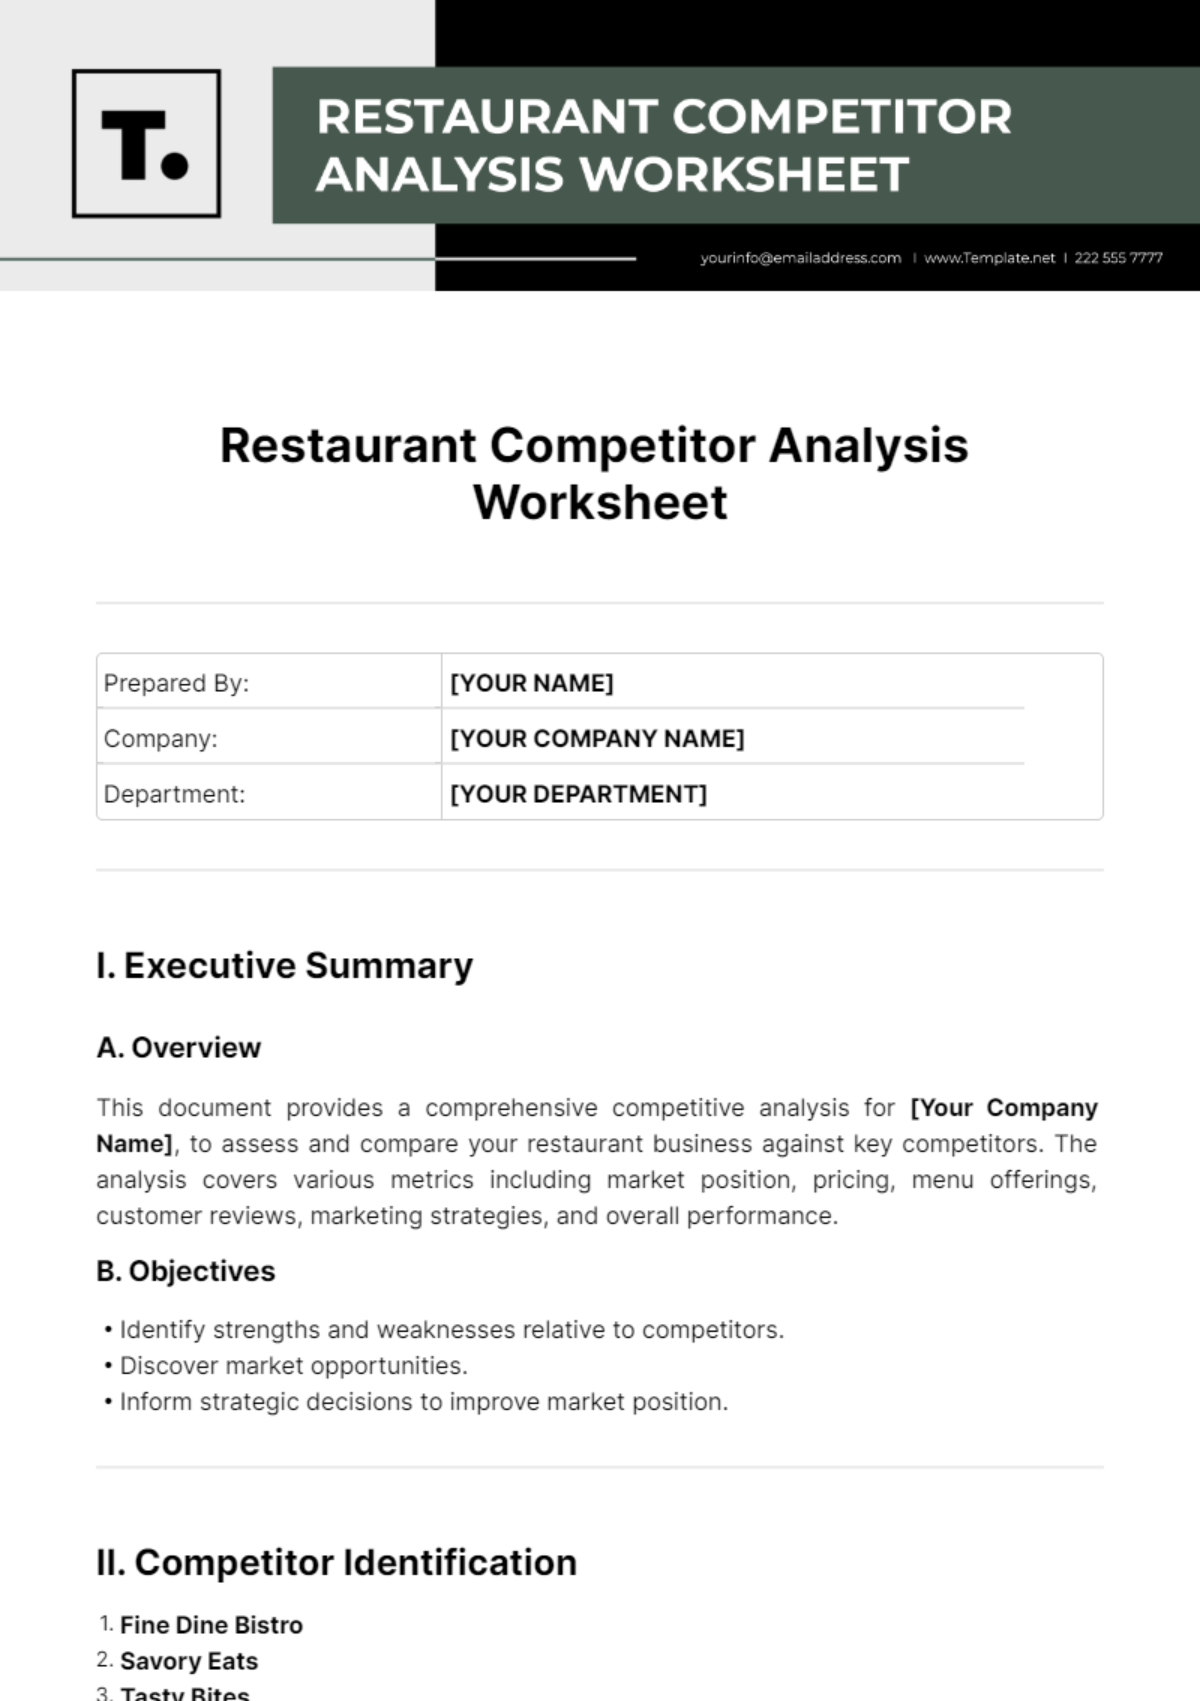 Restaurant Competitor Analysis Worksheet Template